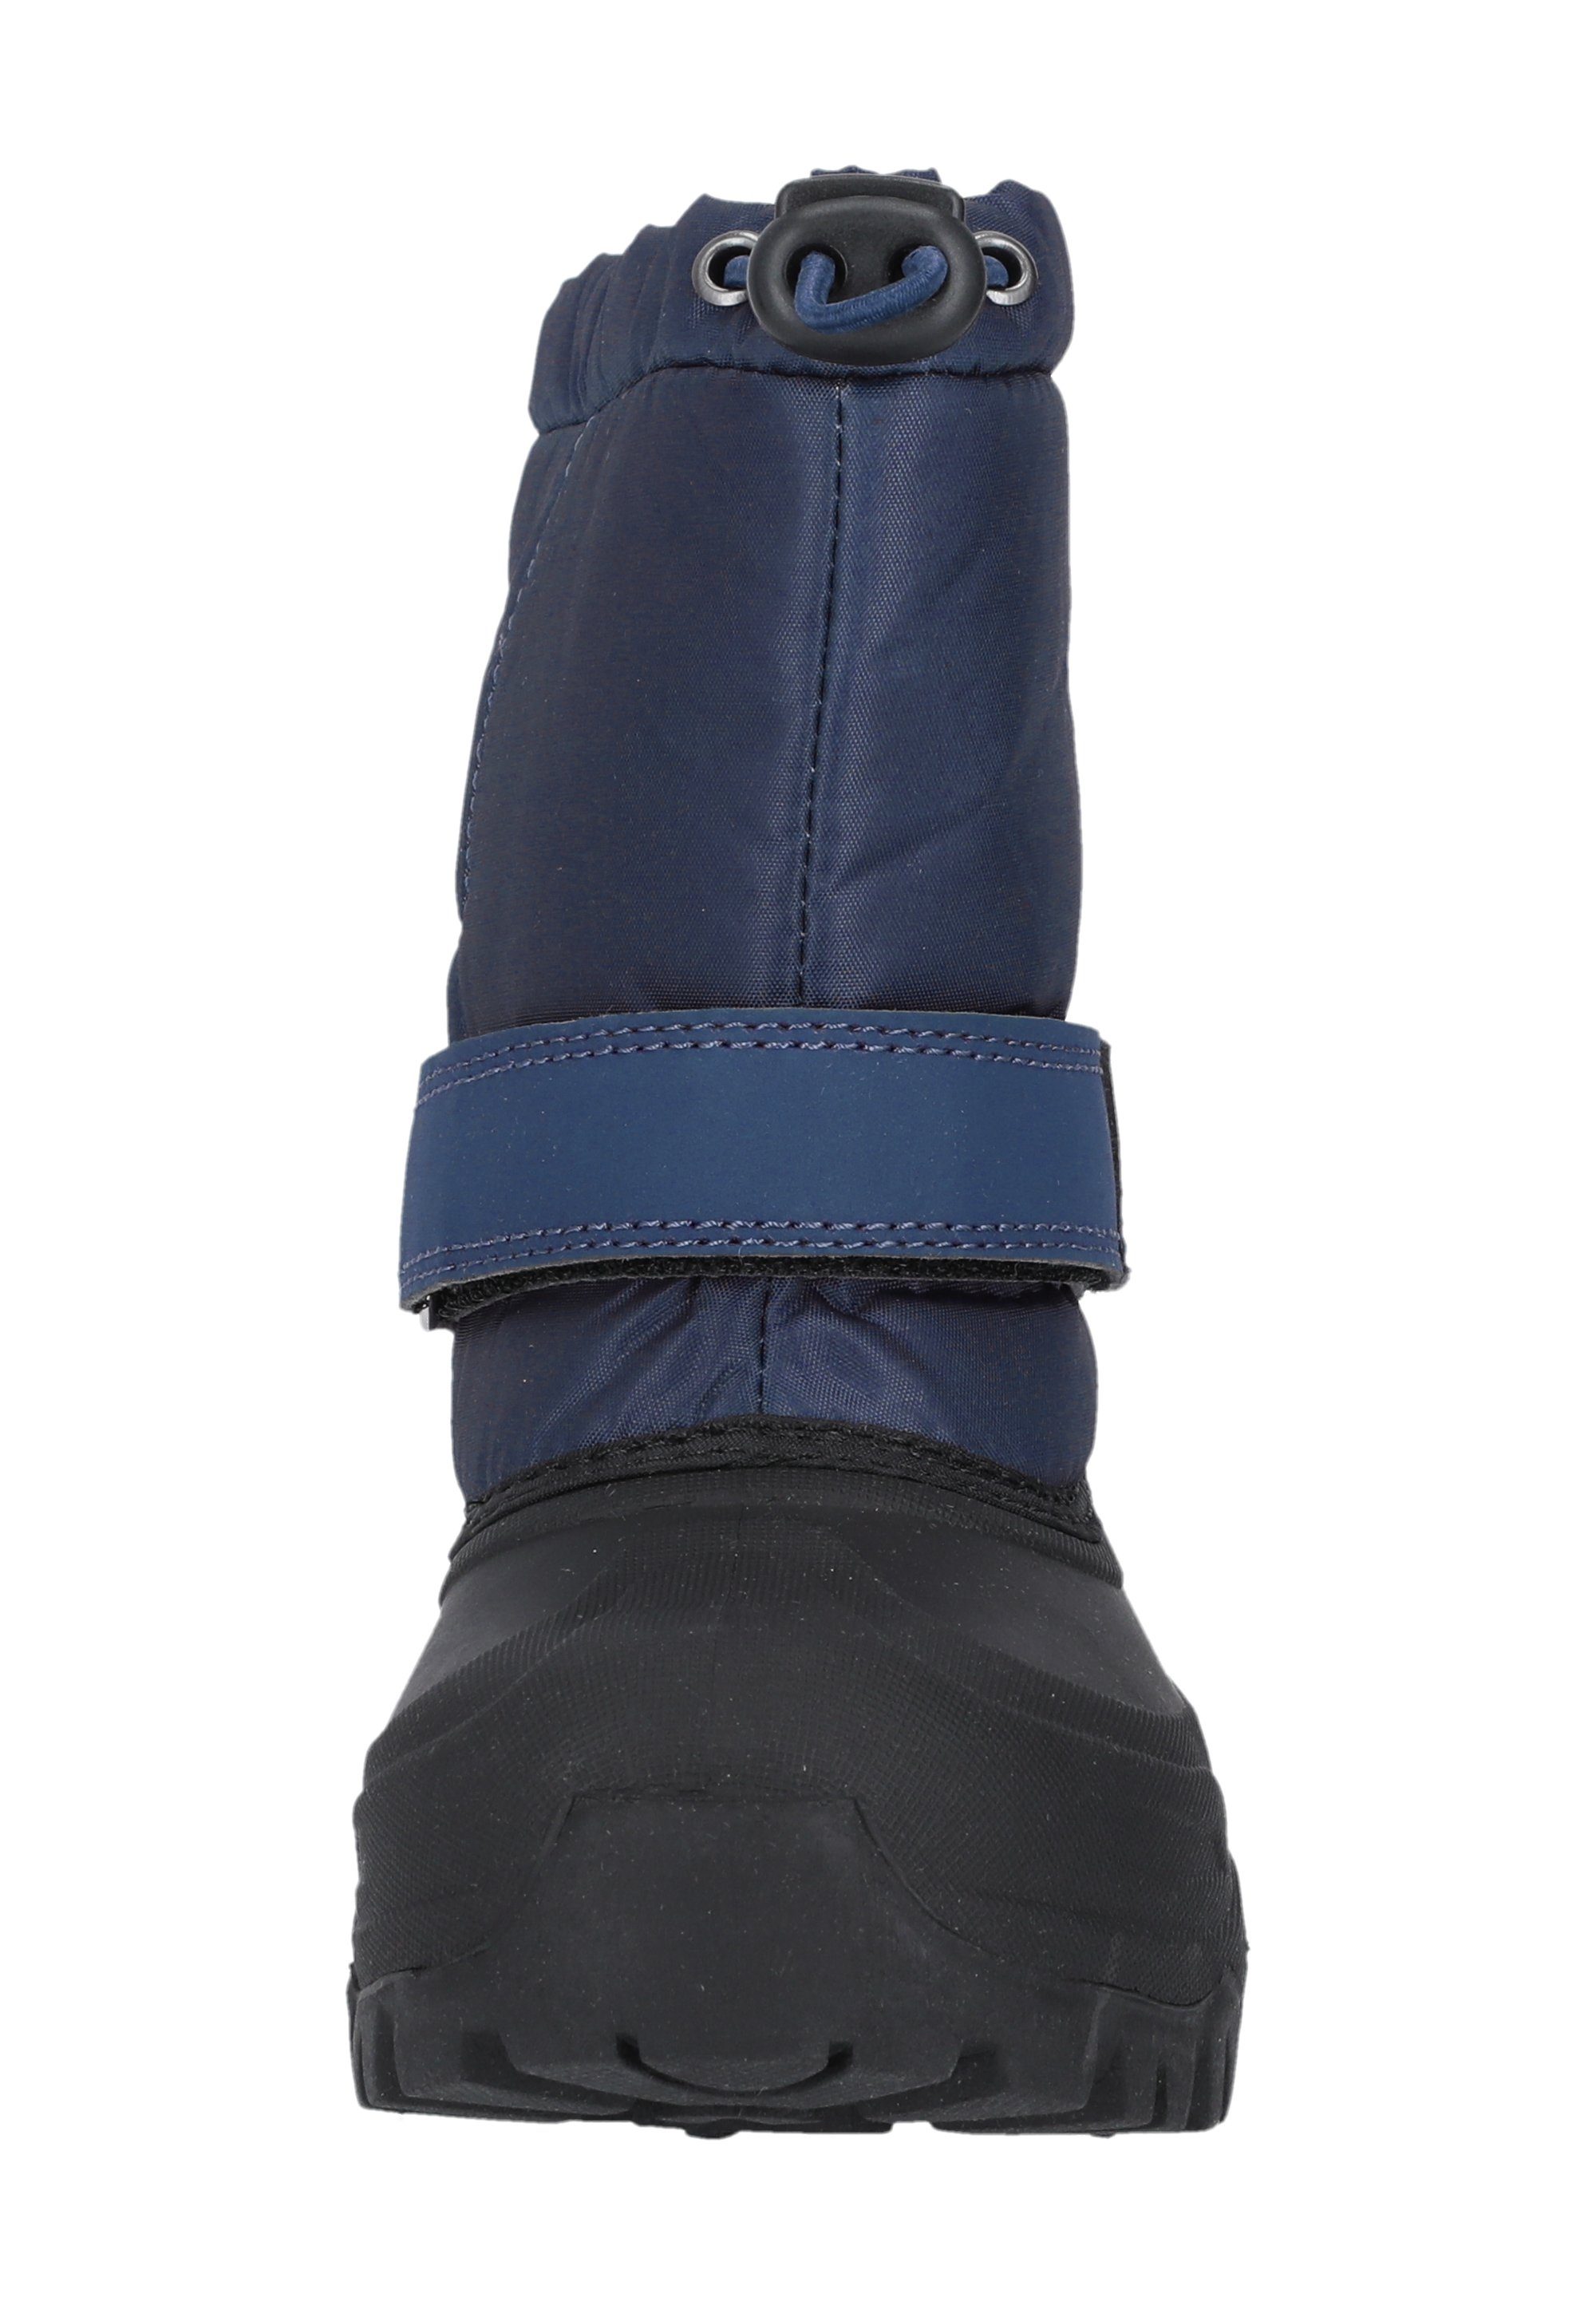 Stiefel mit strapazierfähiger Wanoha blau Sohle ZIGZAG